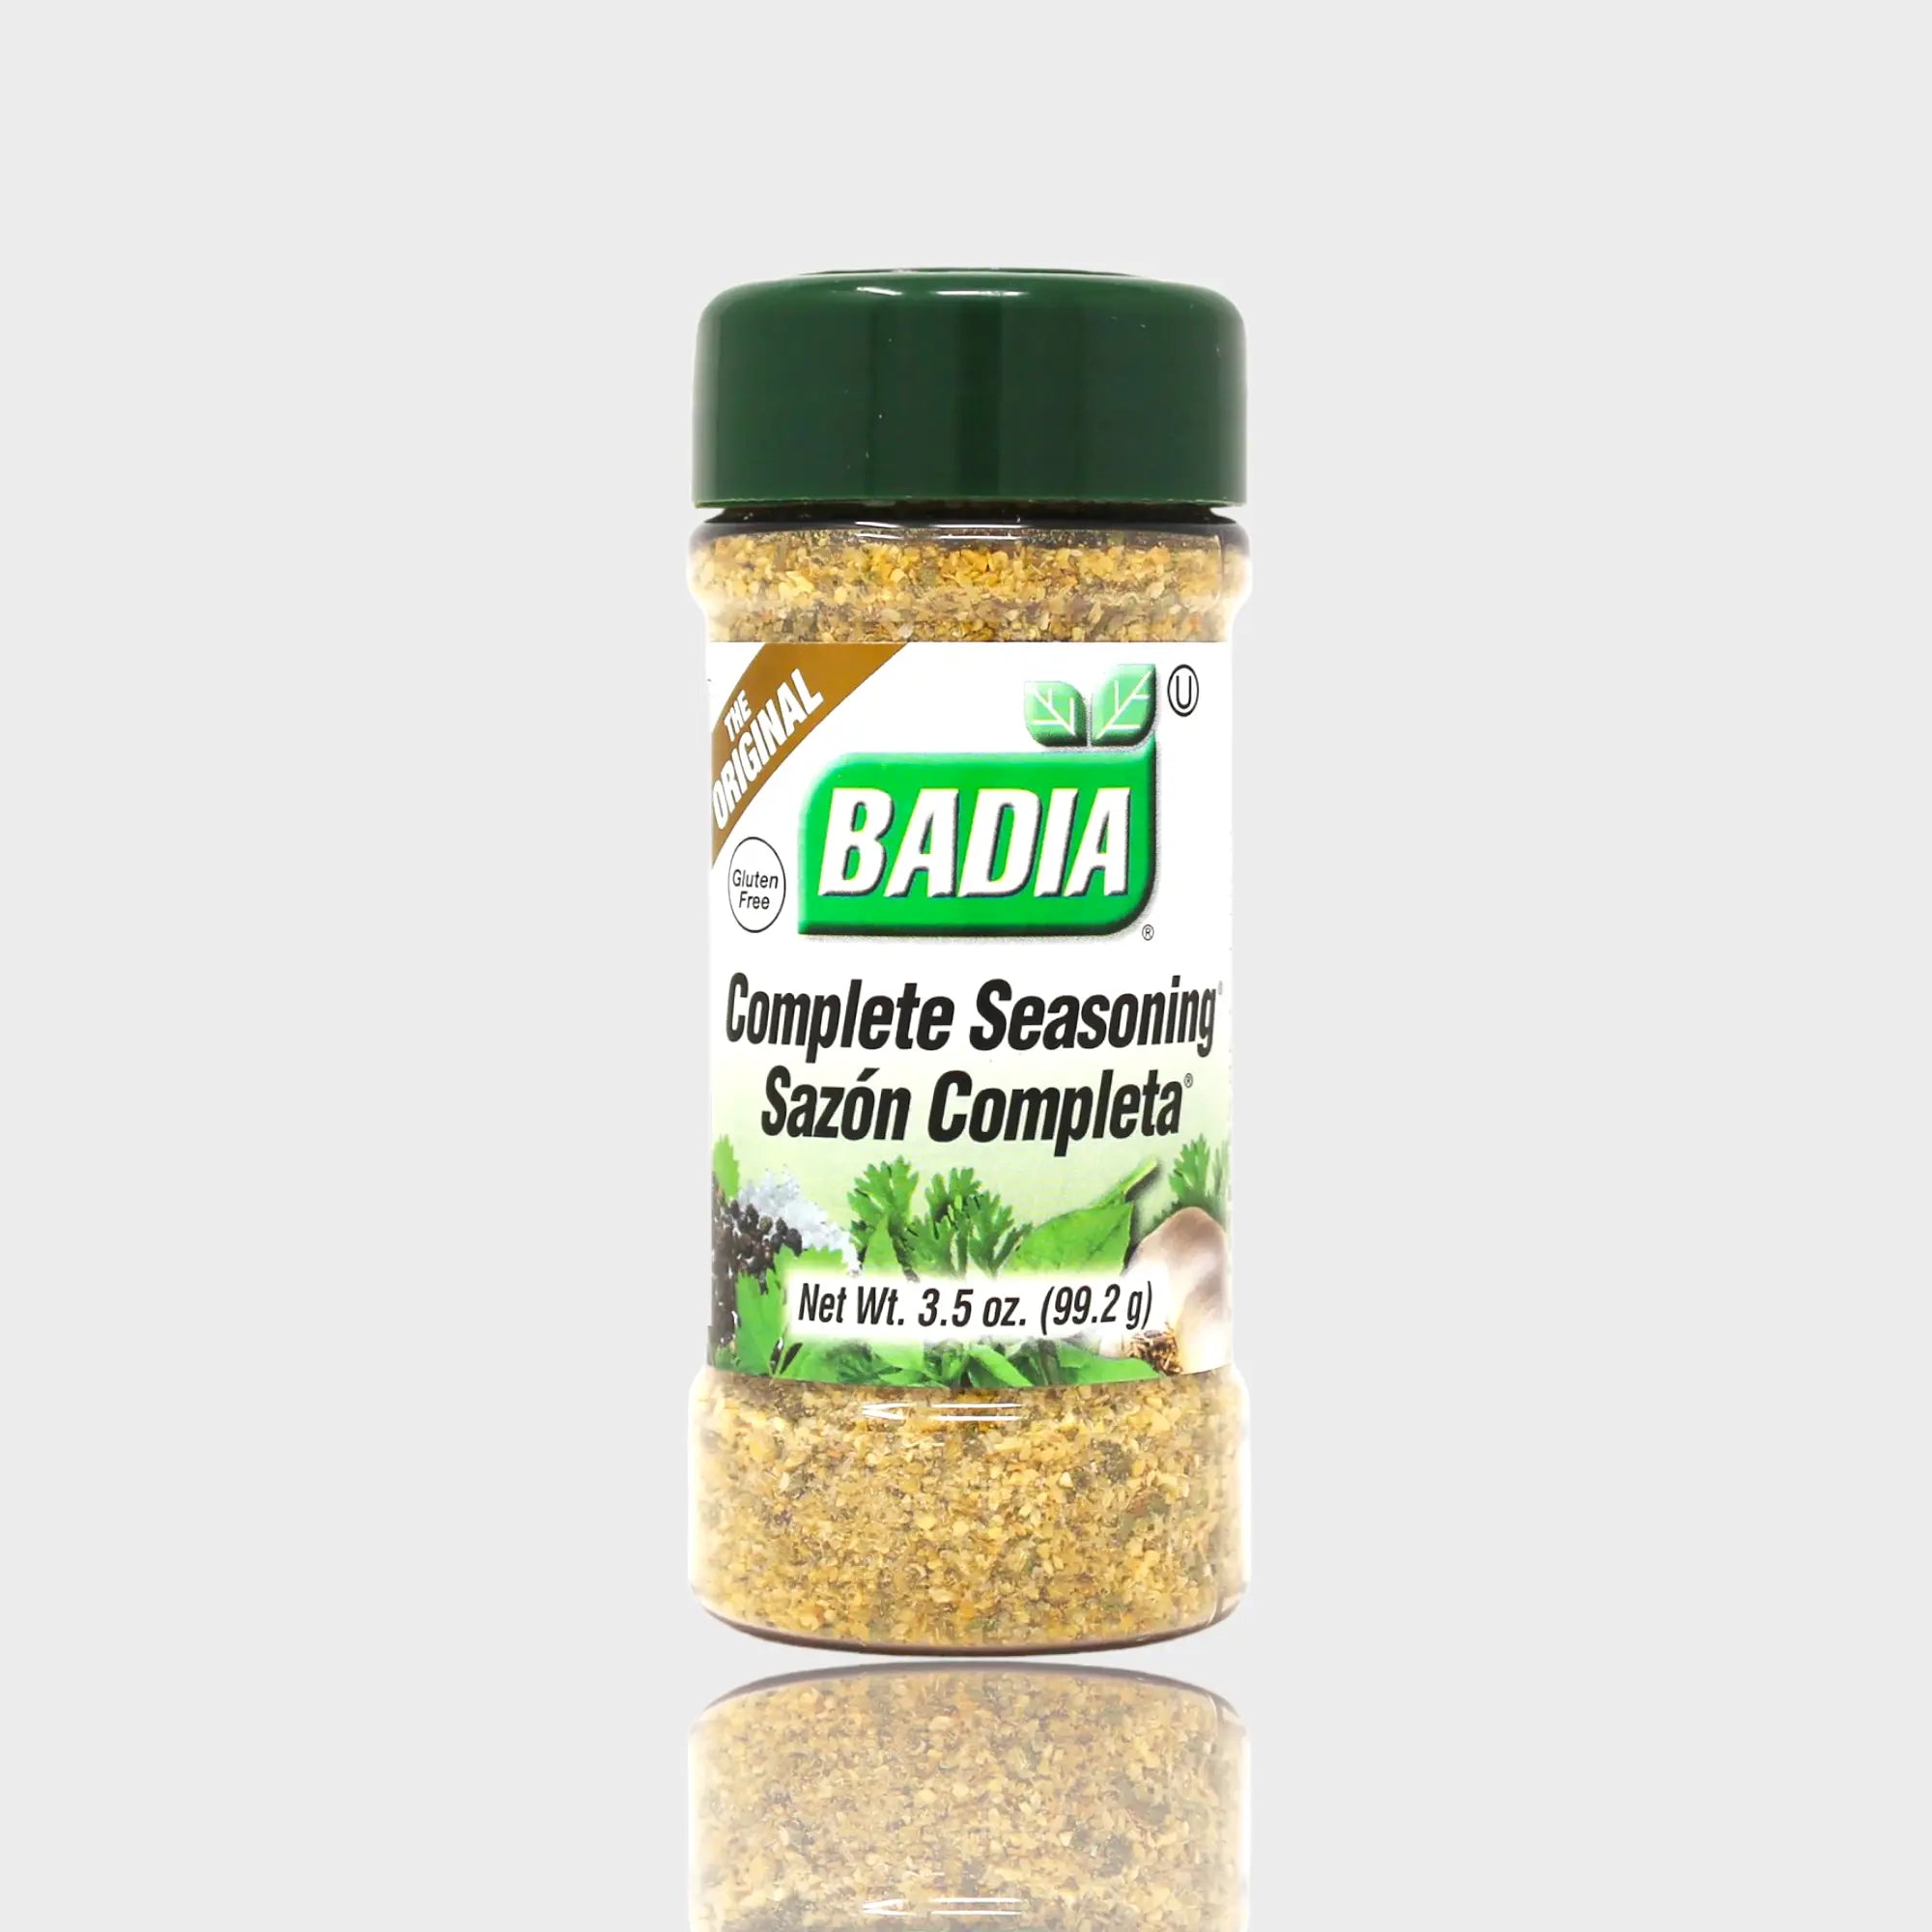 Badia The Original Complete Seasoning 3.5 oz (99.2g)